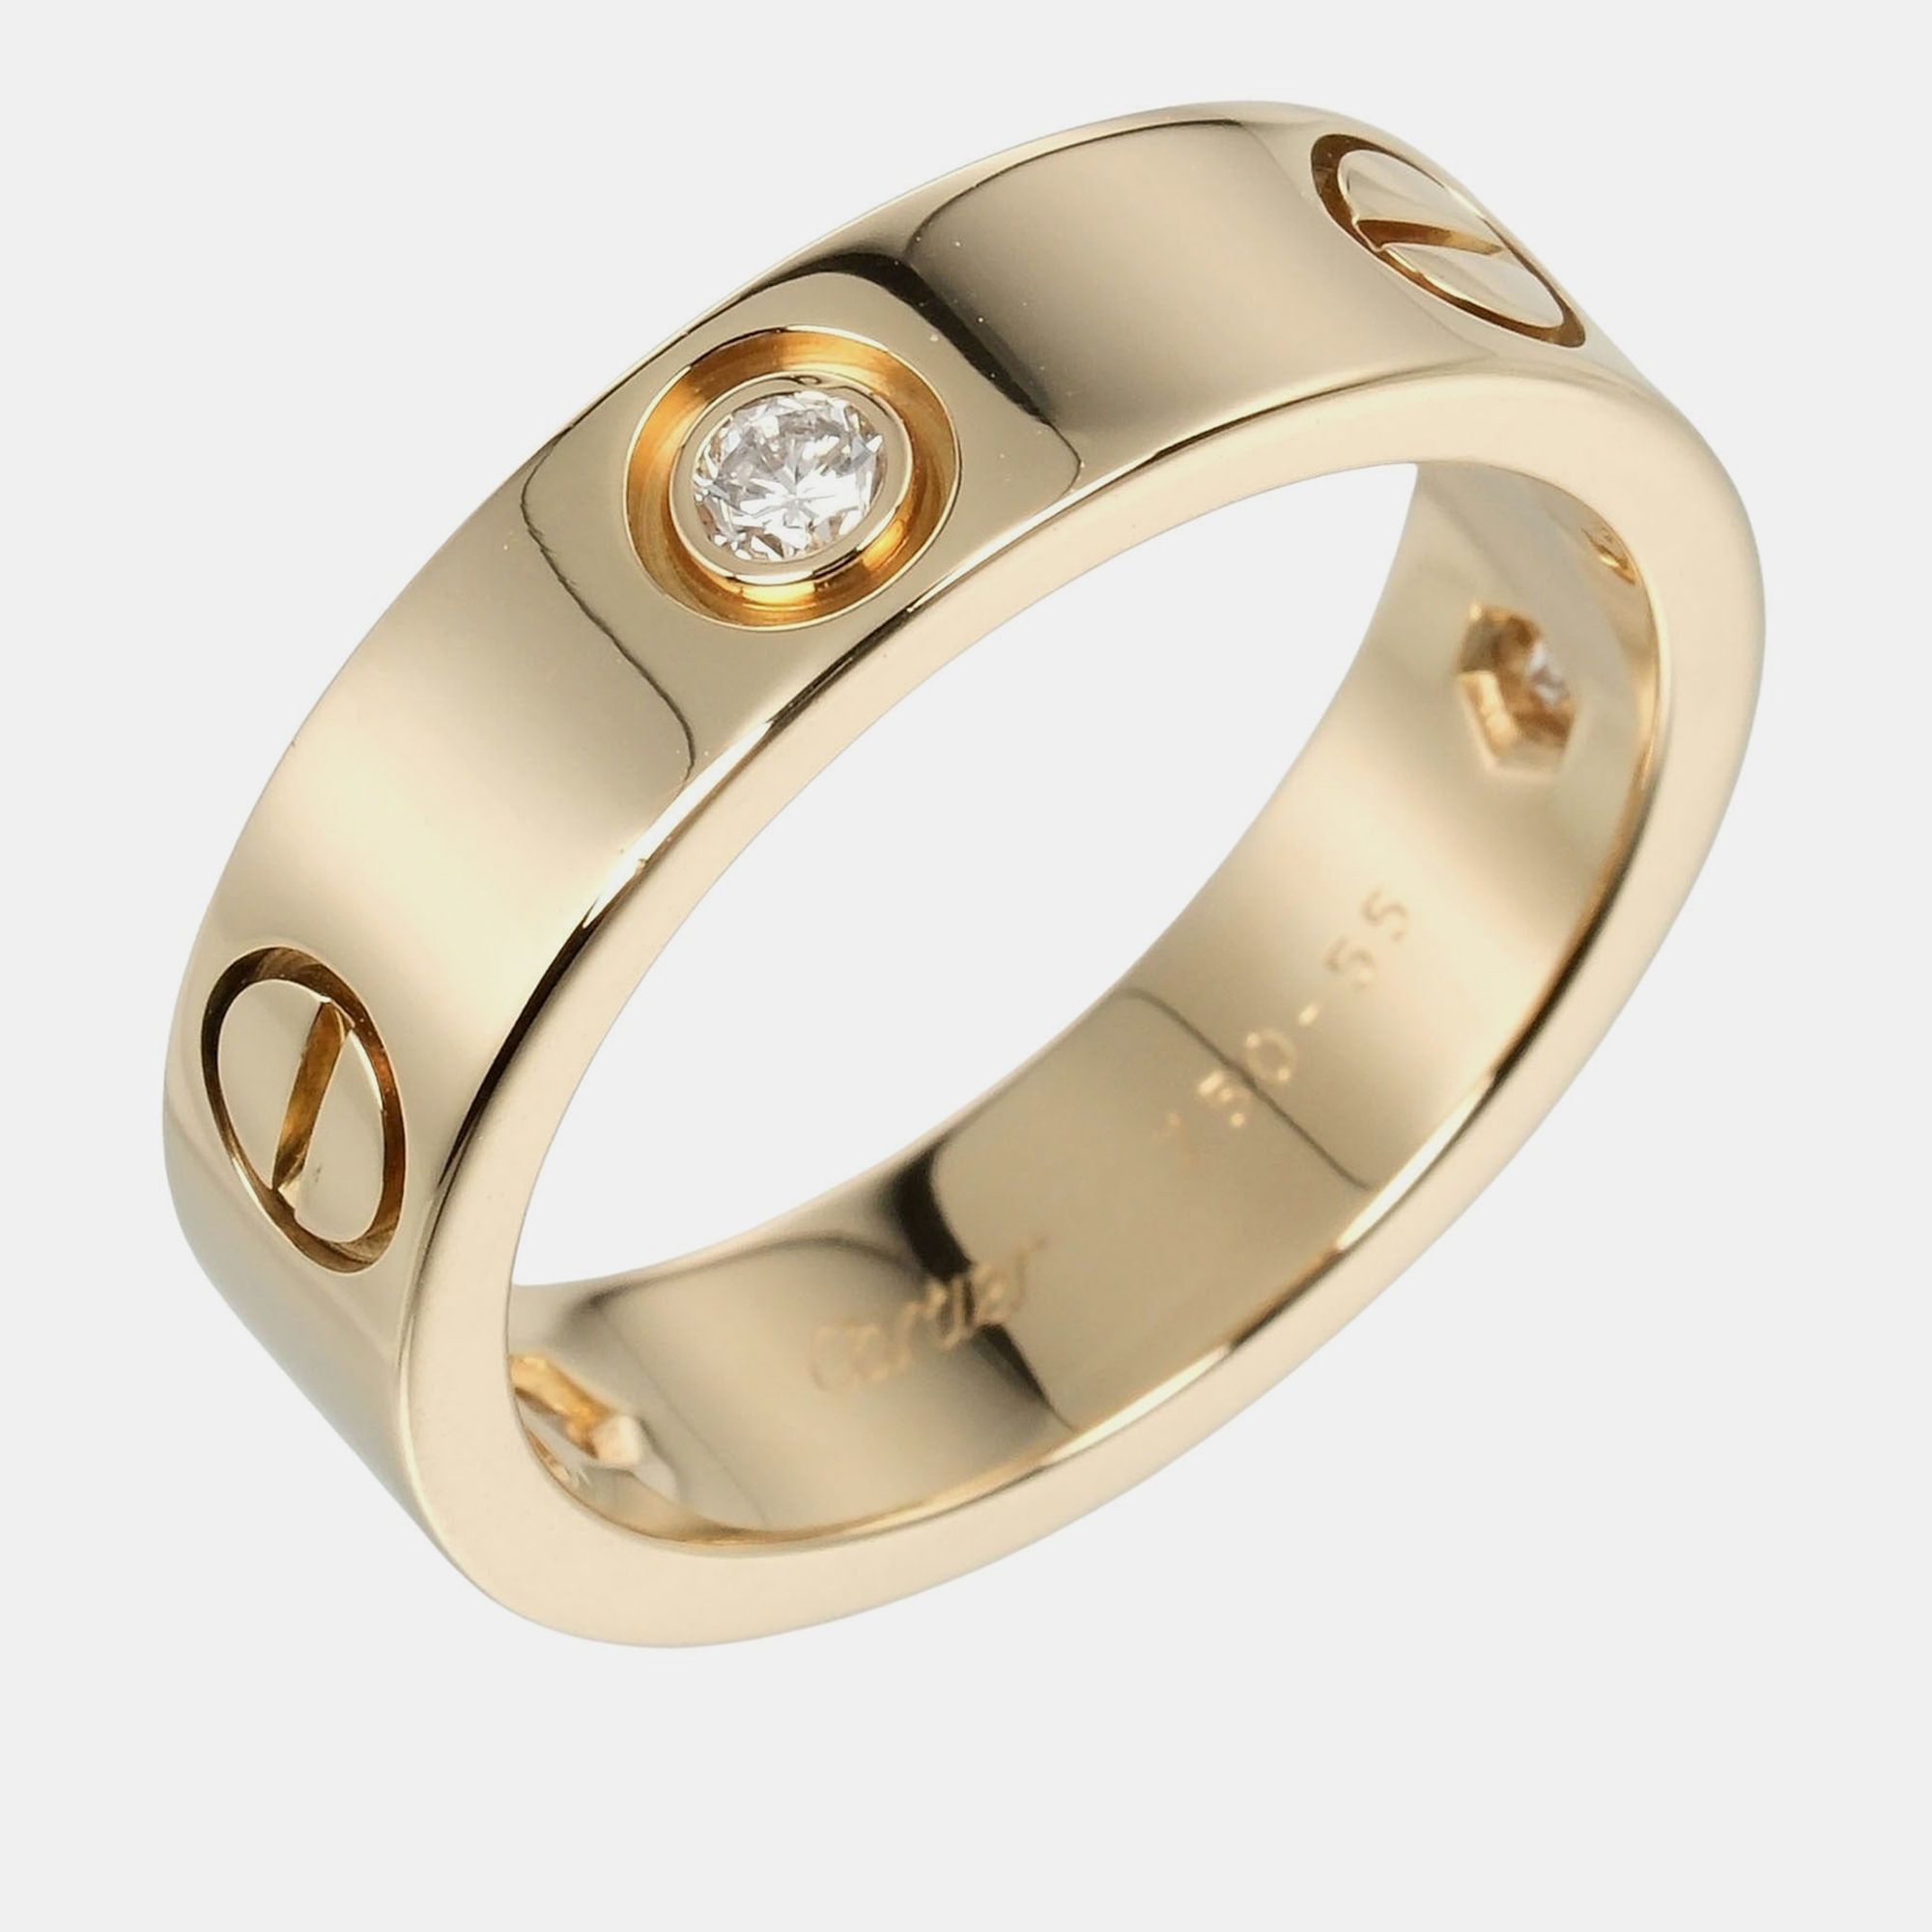 Cartier 18k yellow gold and diamond love band ring eu 55